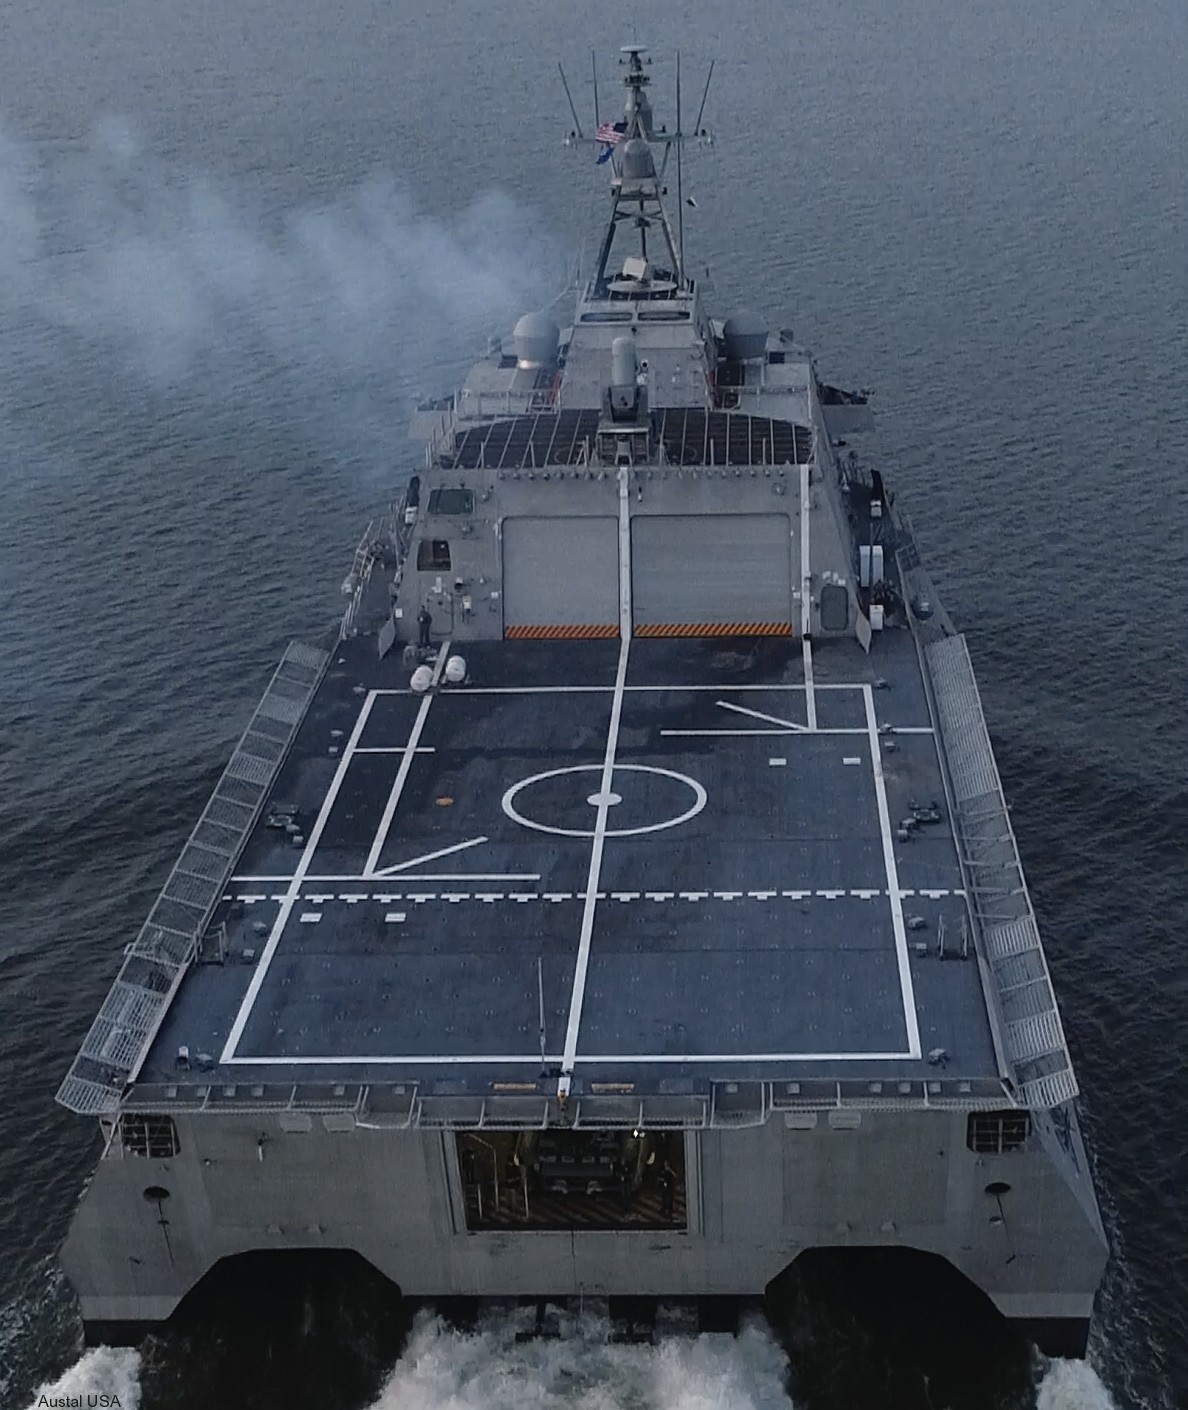 lcs-22 uss kansas city independence class littoral combat ship us navy 16 acceptance trials